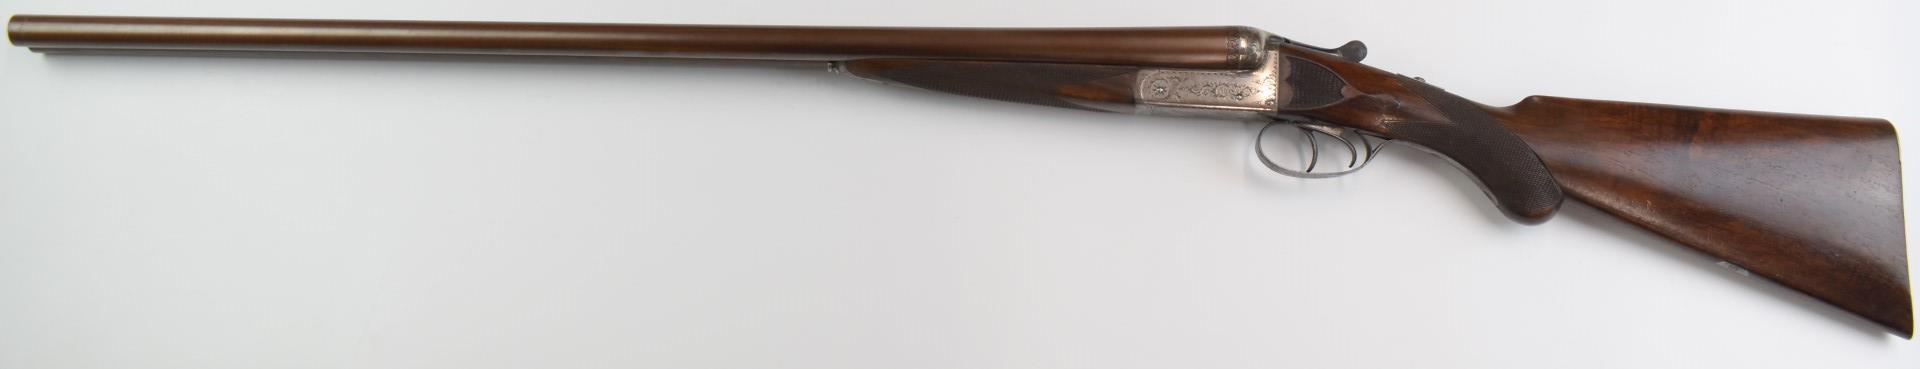 C G Bonehill 12 bore side by side shotgun with engraved locks, underside, trigger guard, top - Image 16 of 30